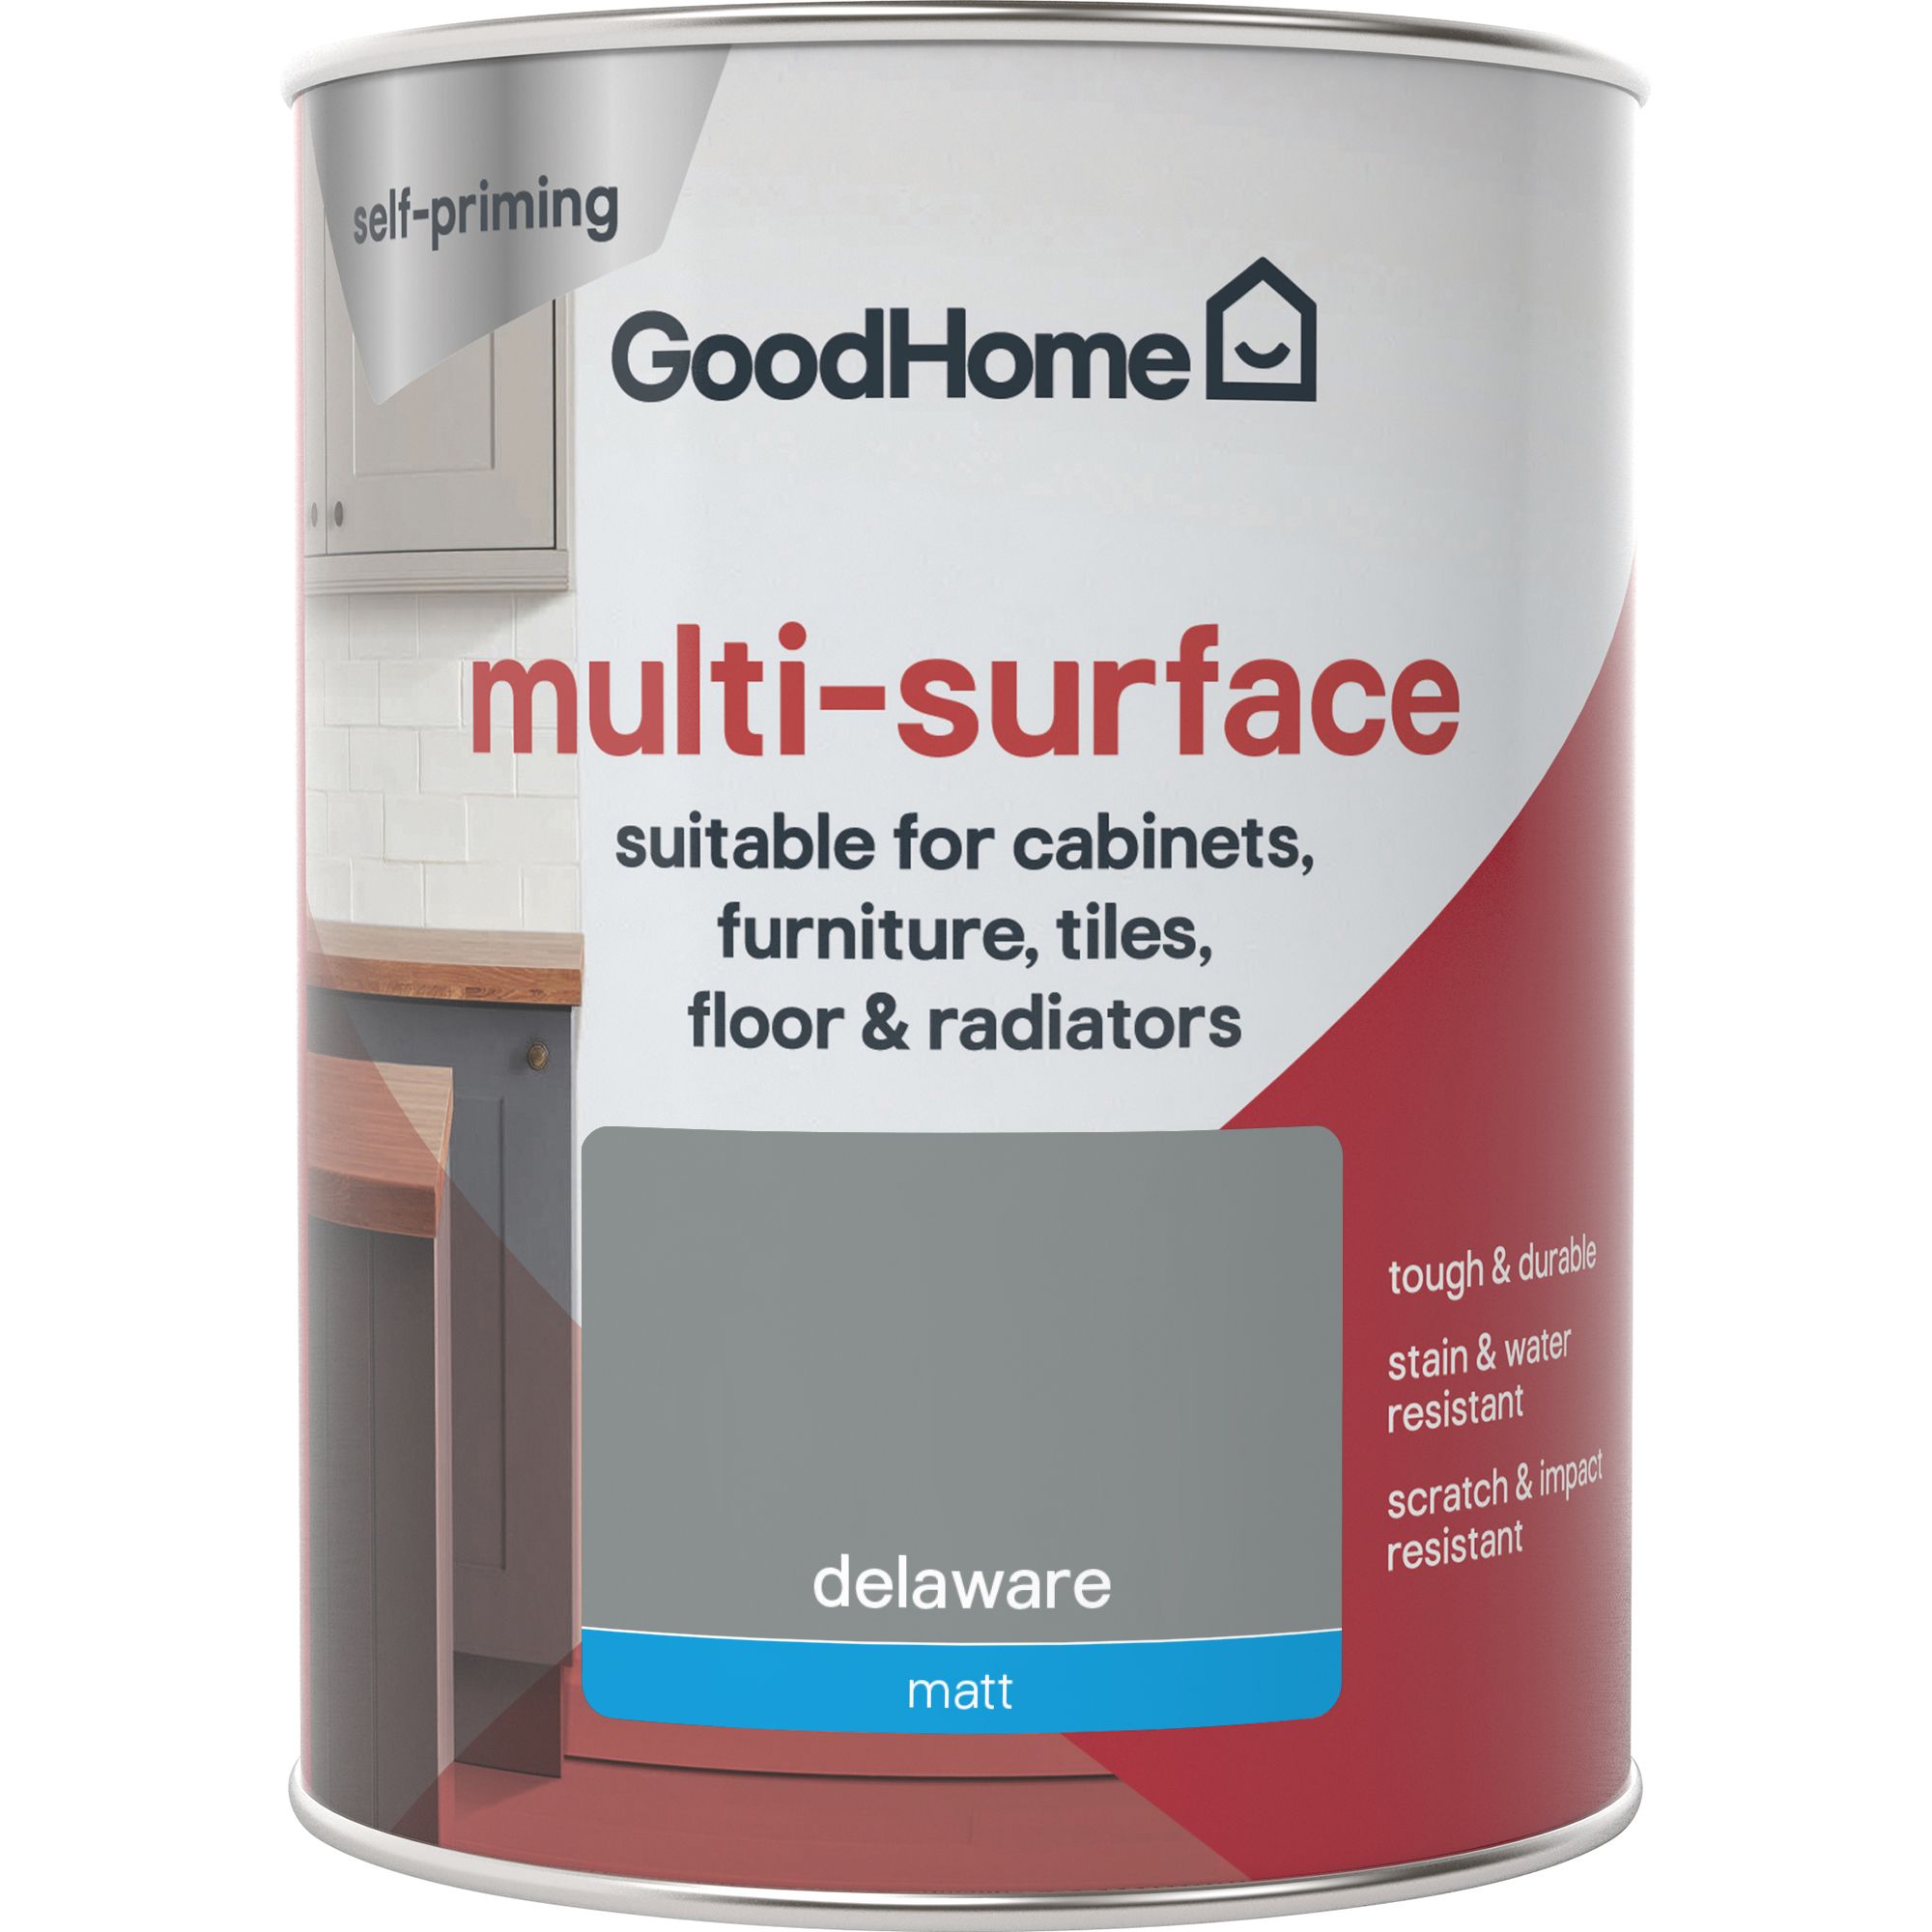 GoodHome Durable Delaware Matt Multi-surface paint, 750ml